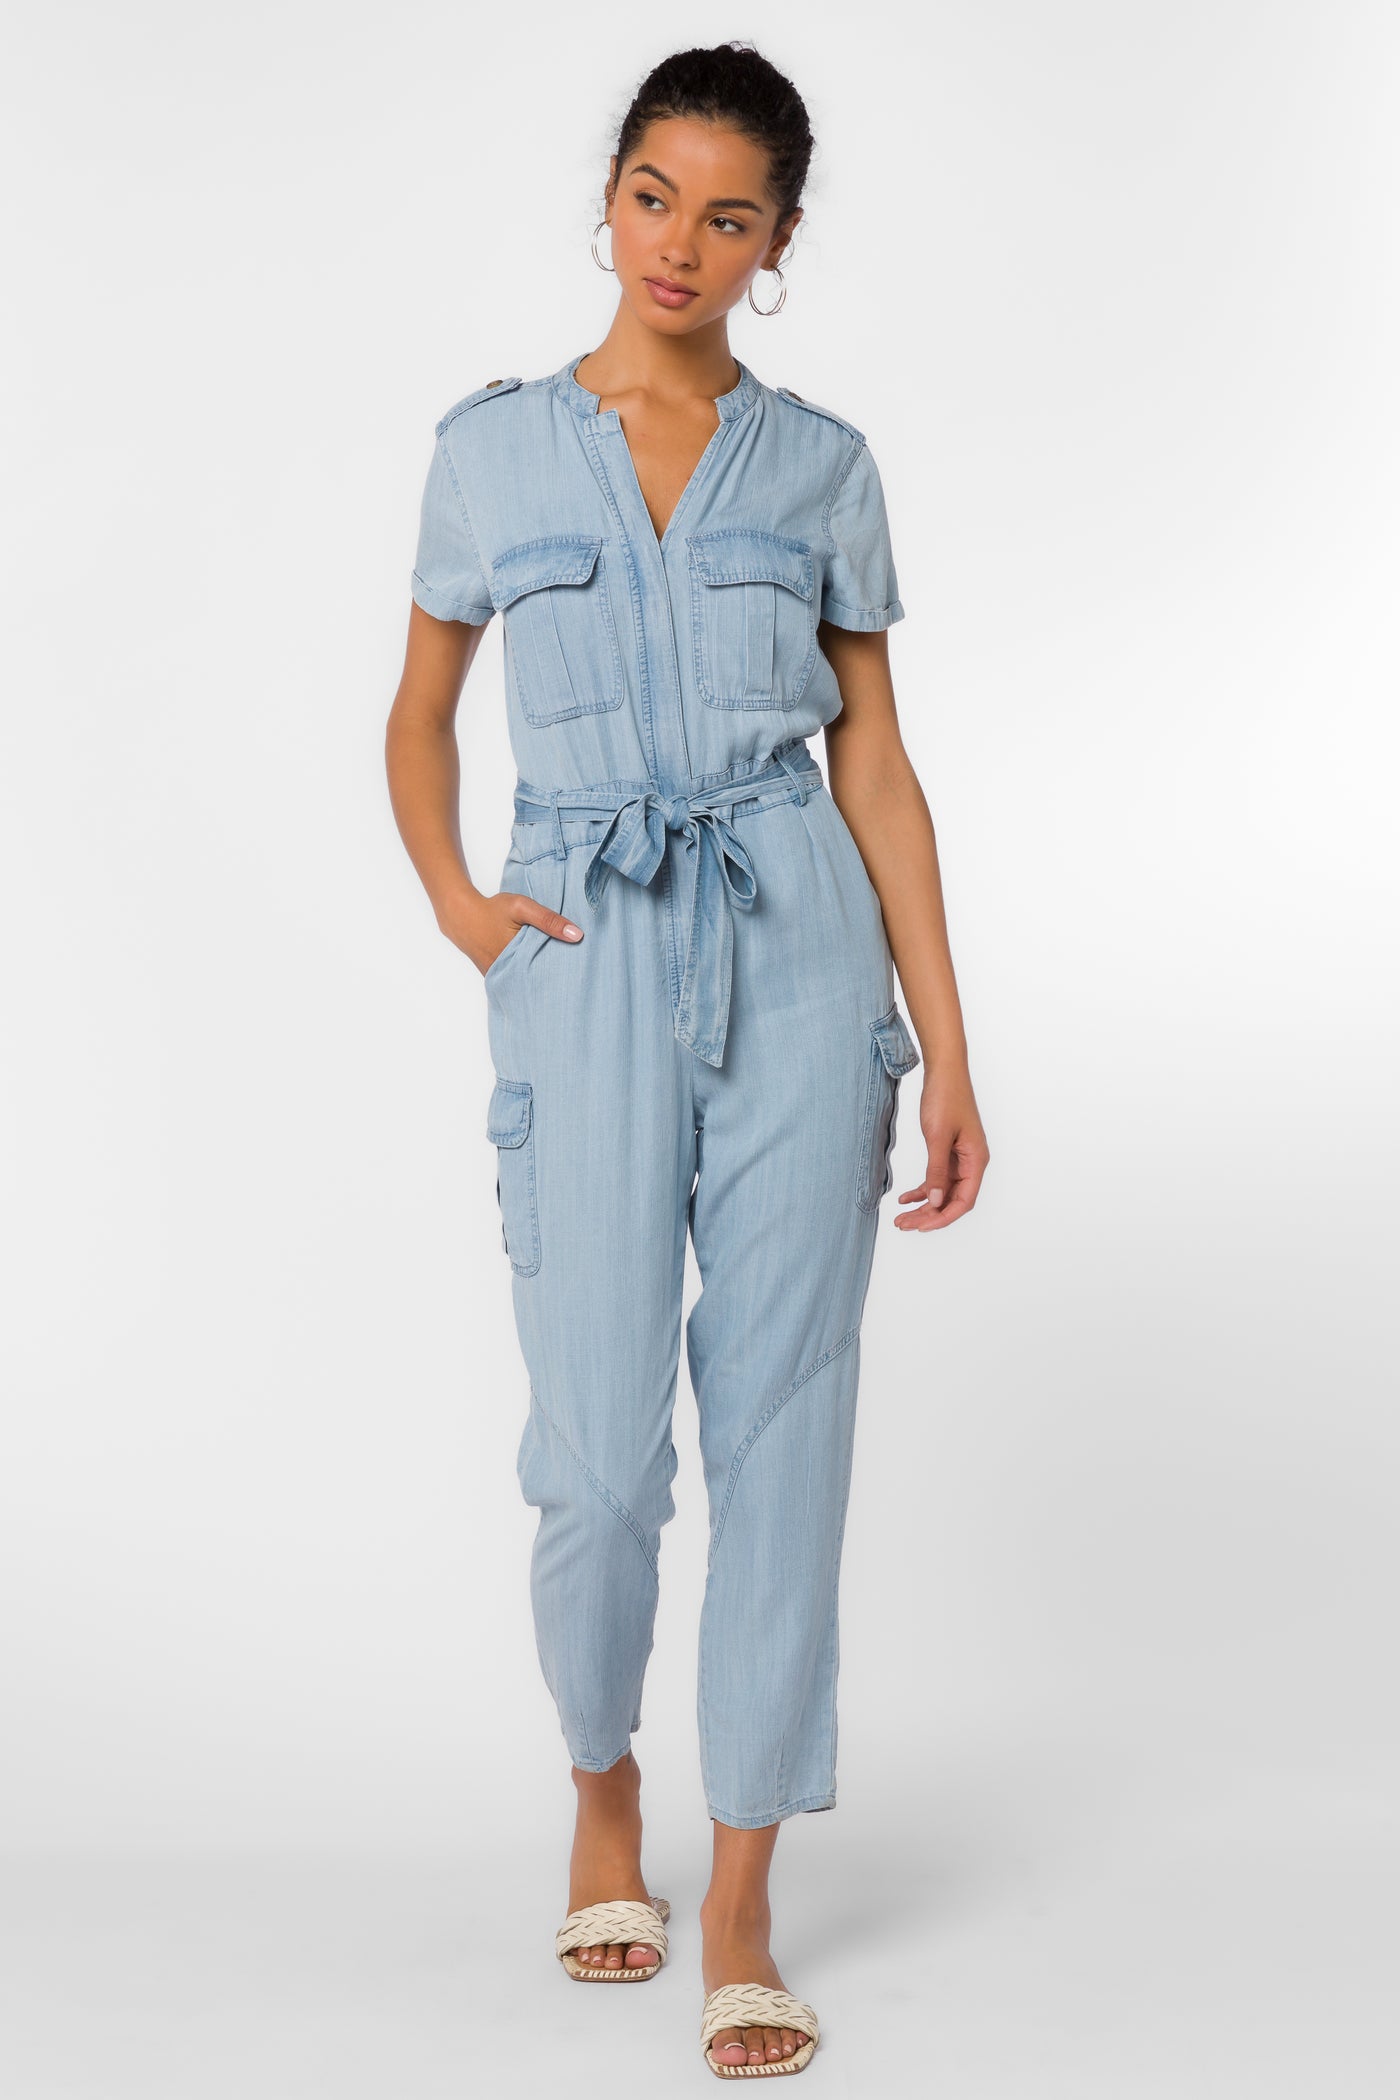 Greyson Blue Jumpsuit - Jumpsuits & Rompers - Velvet Heart Clothing